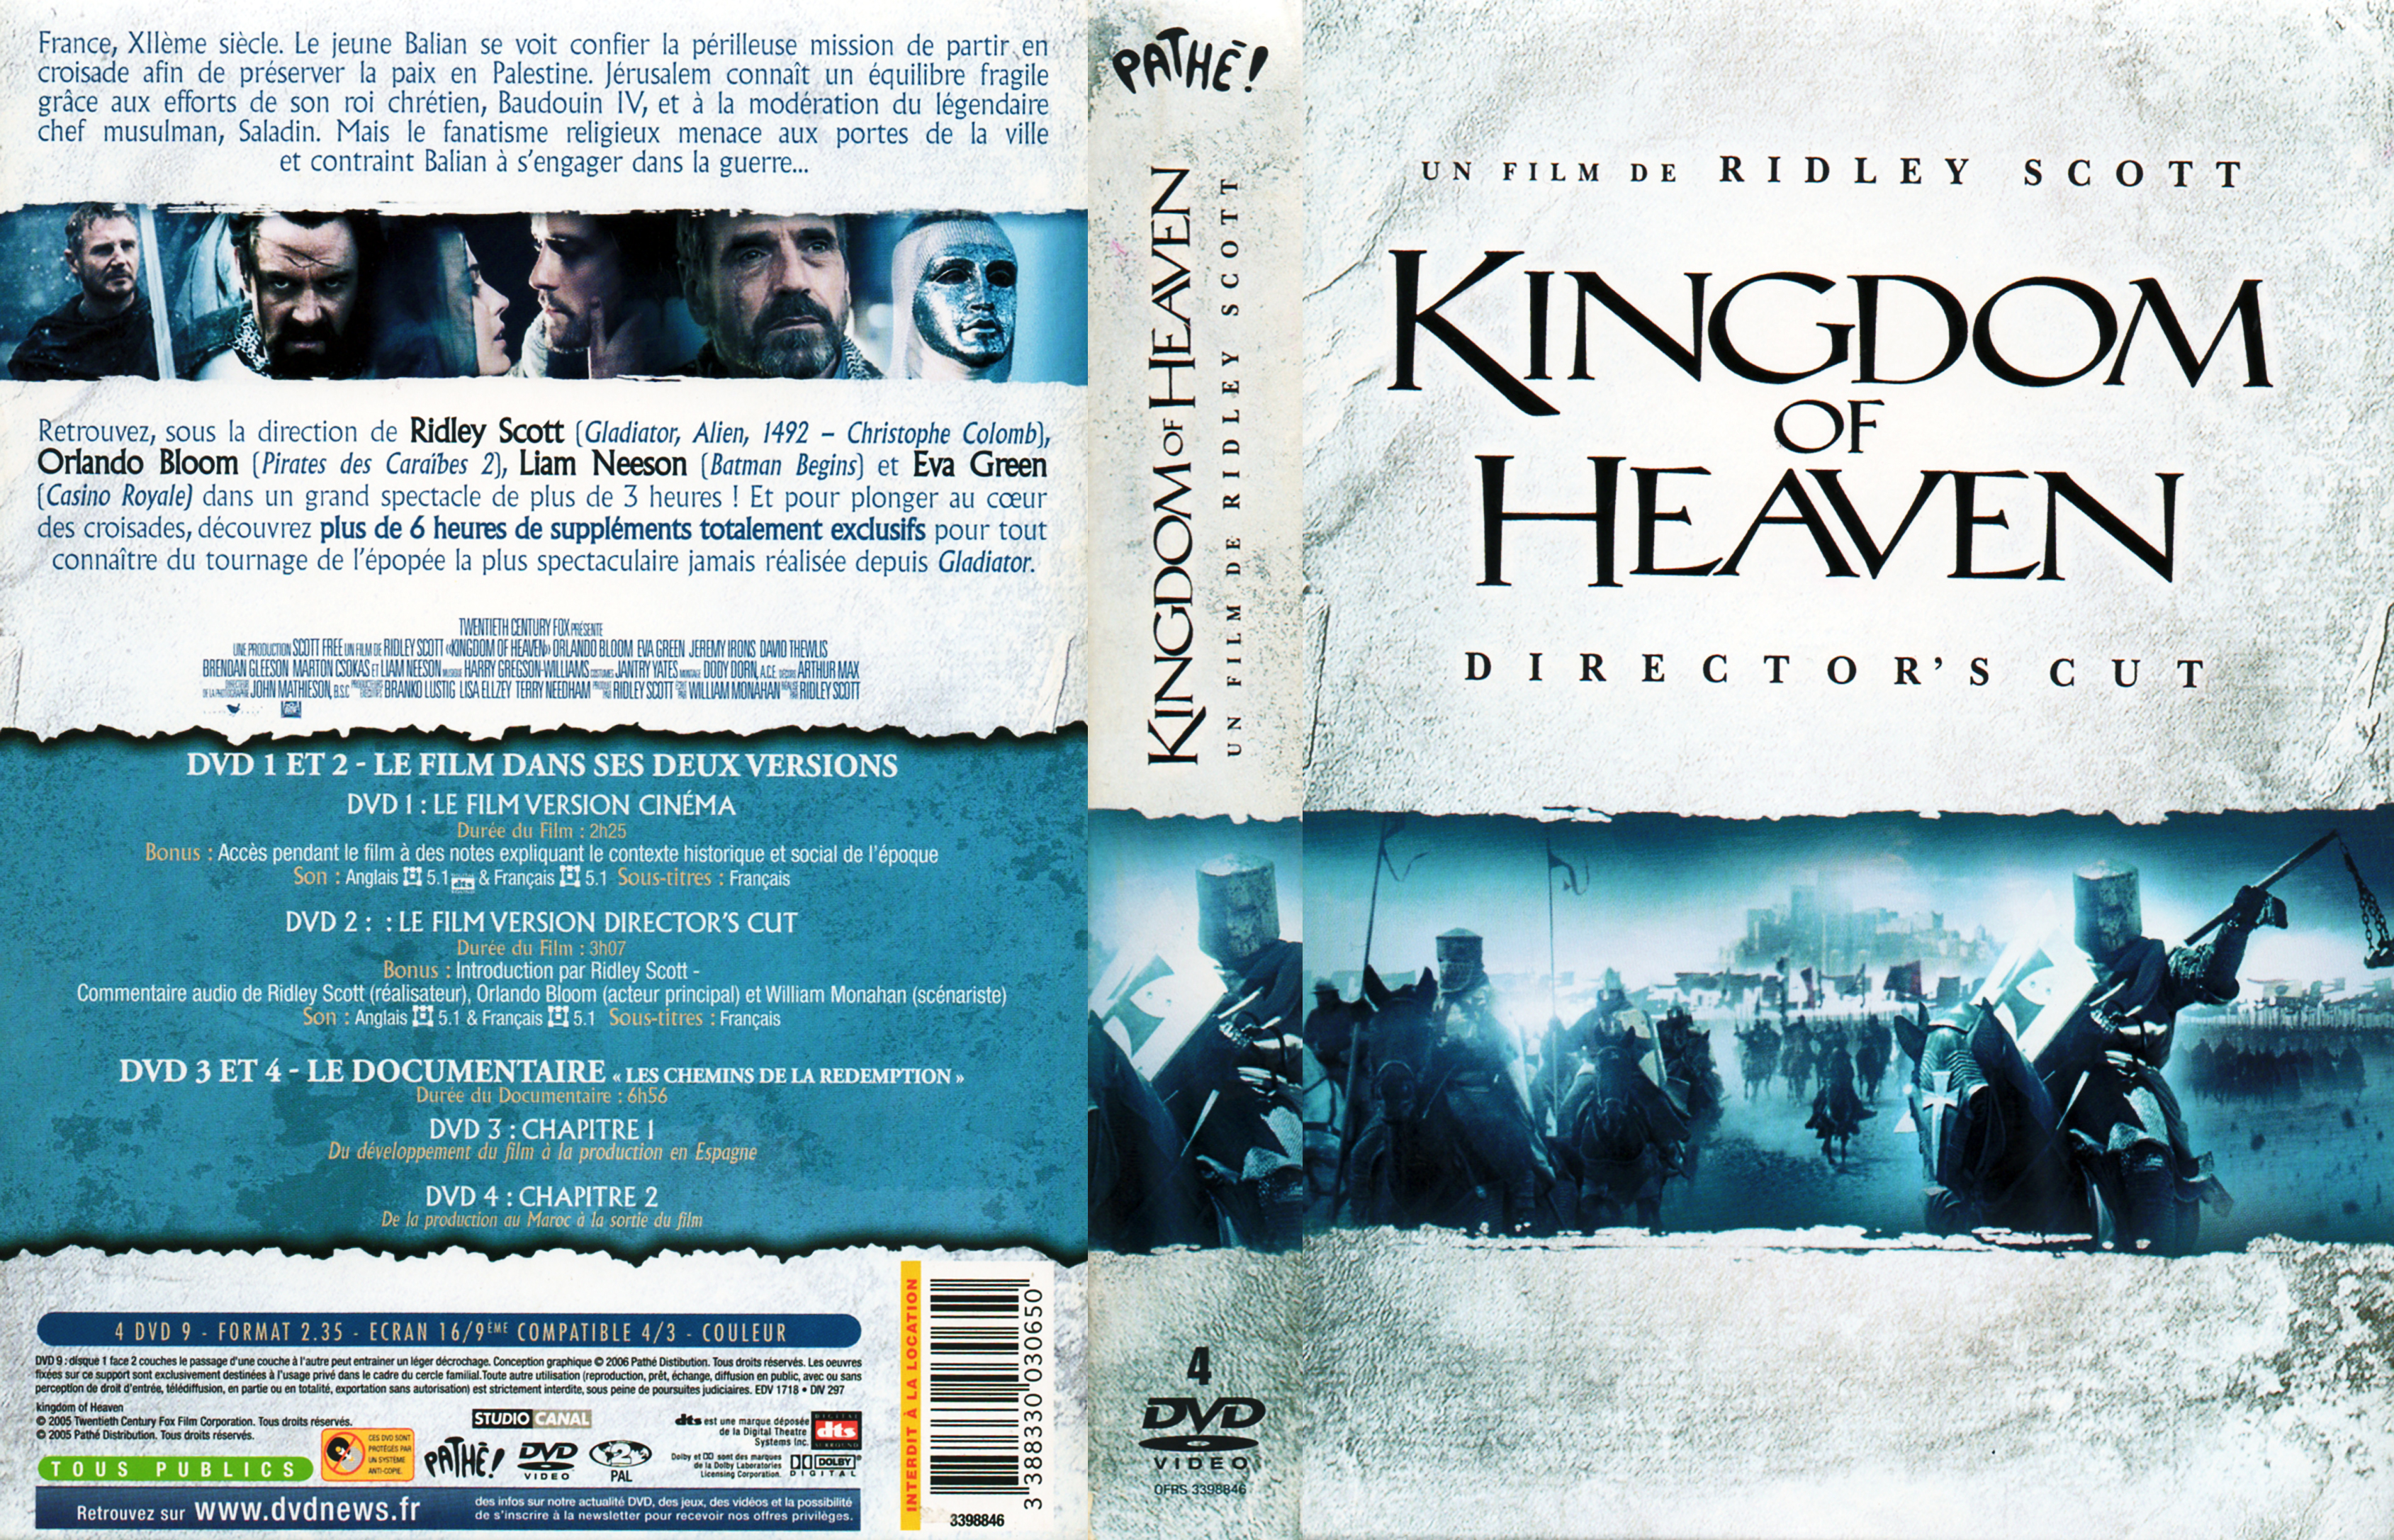 Jaquette DVD Kingdom of heaven v3